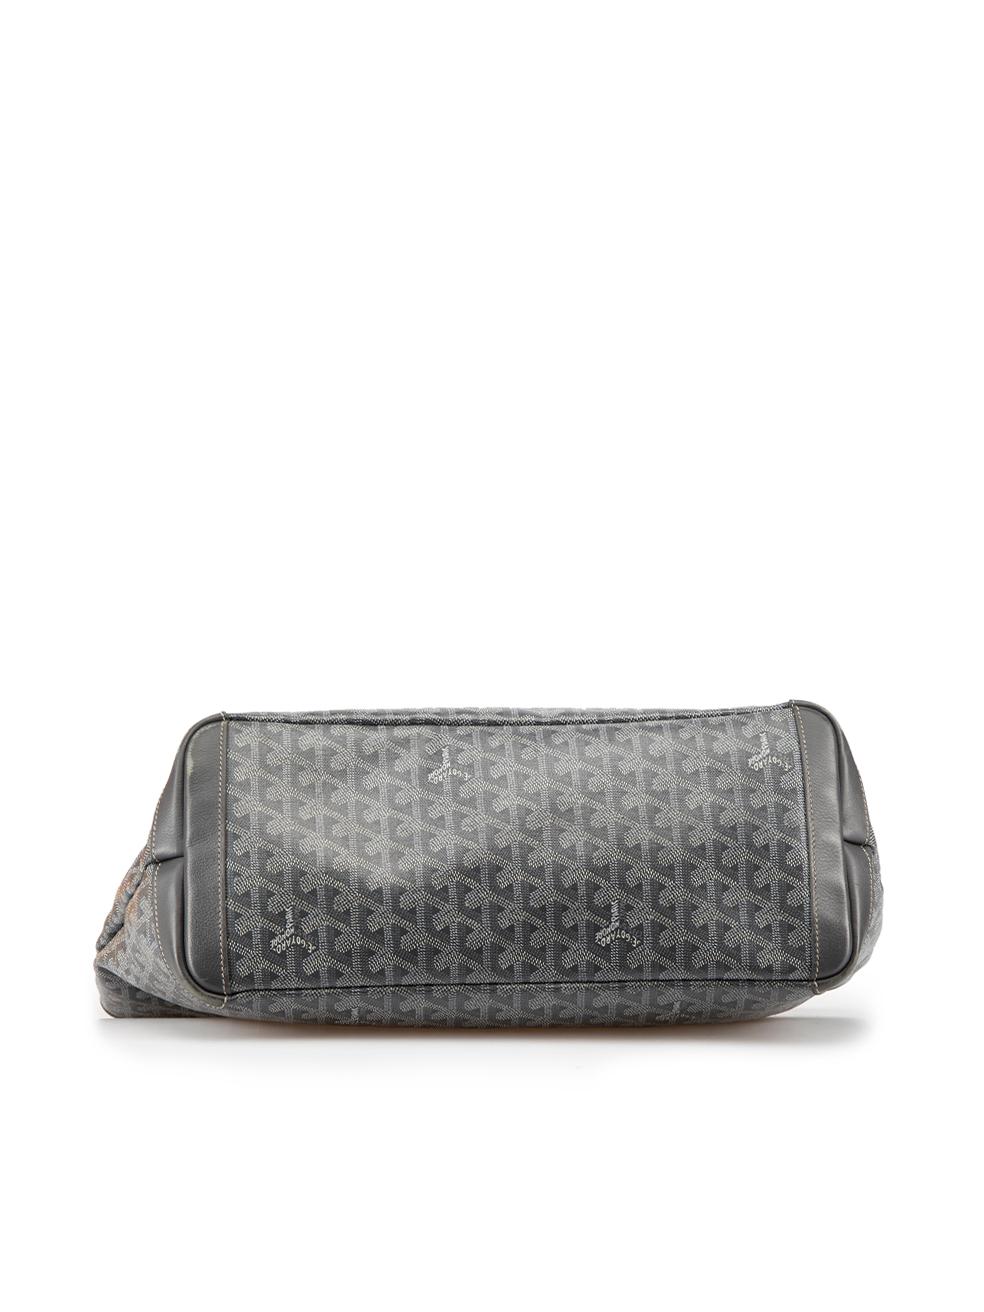 Women's Goyard Grey Artois MM Tote Bag